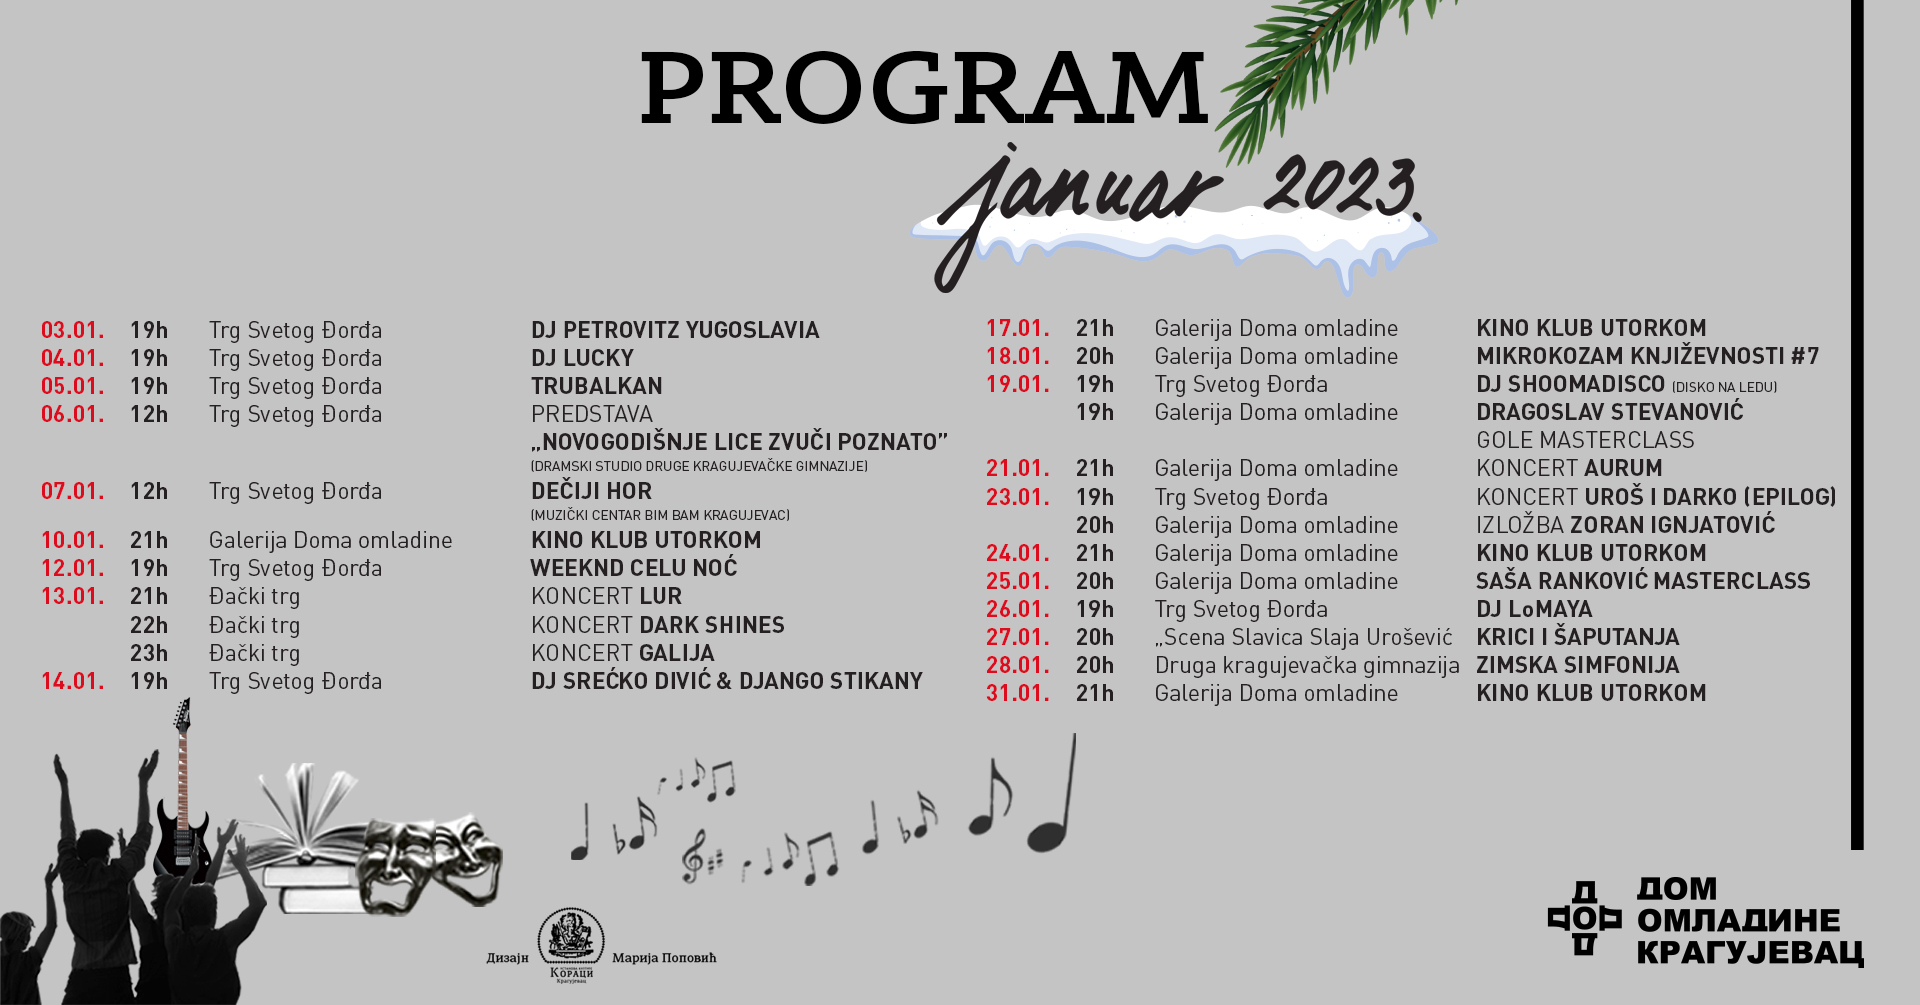 BANER-program-januar-2023_-FB-event